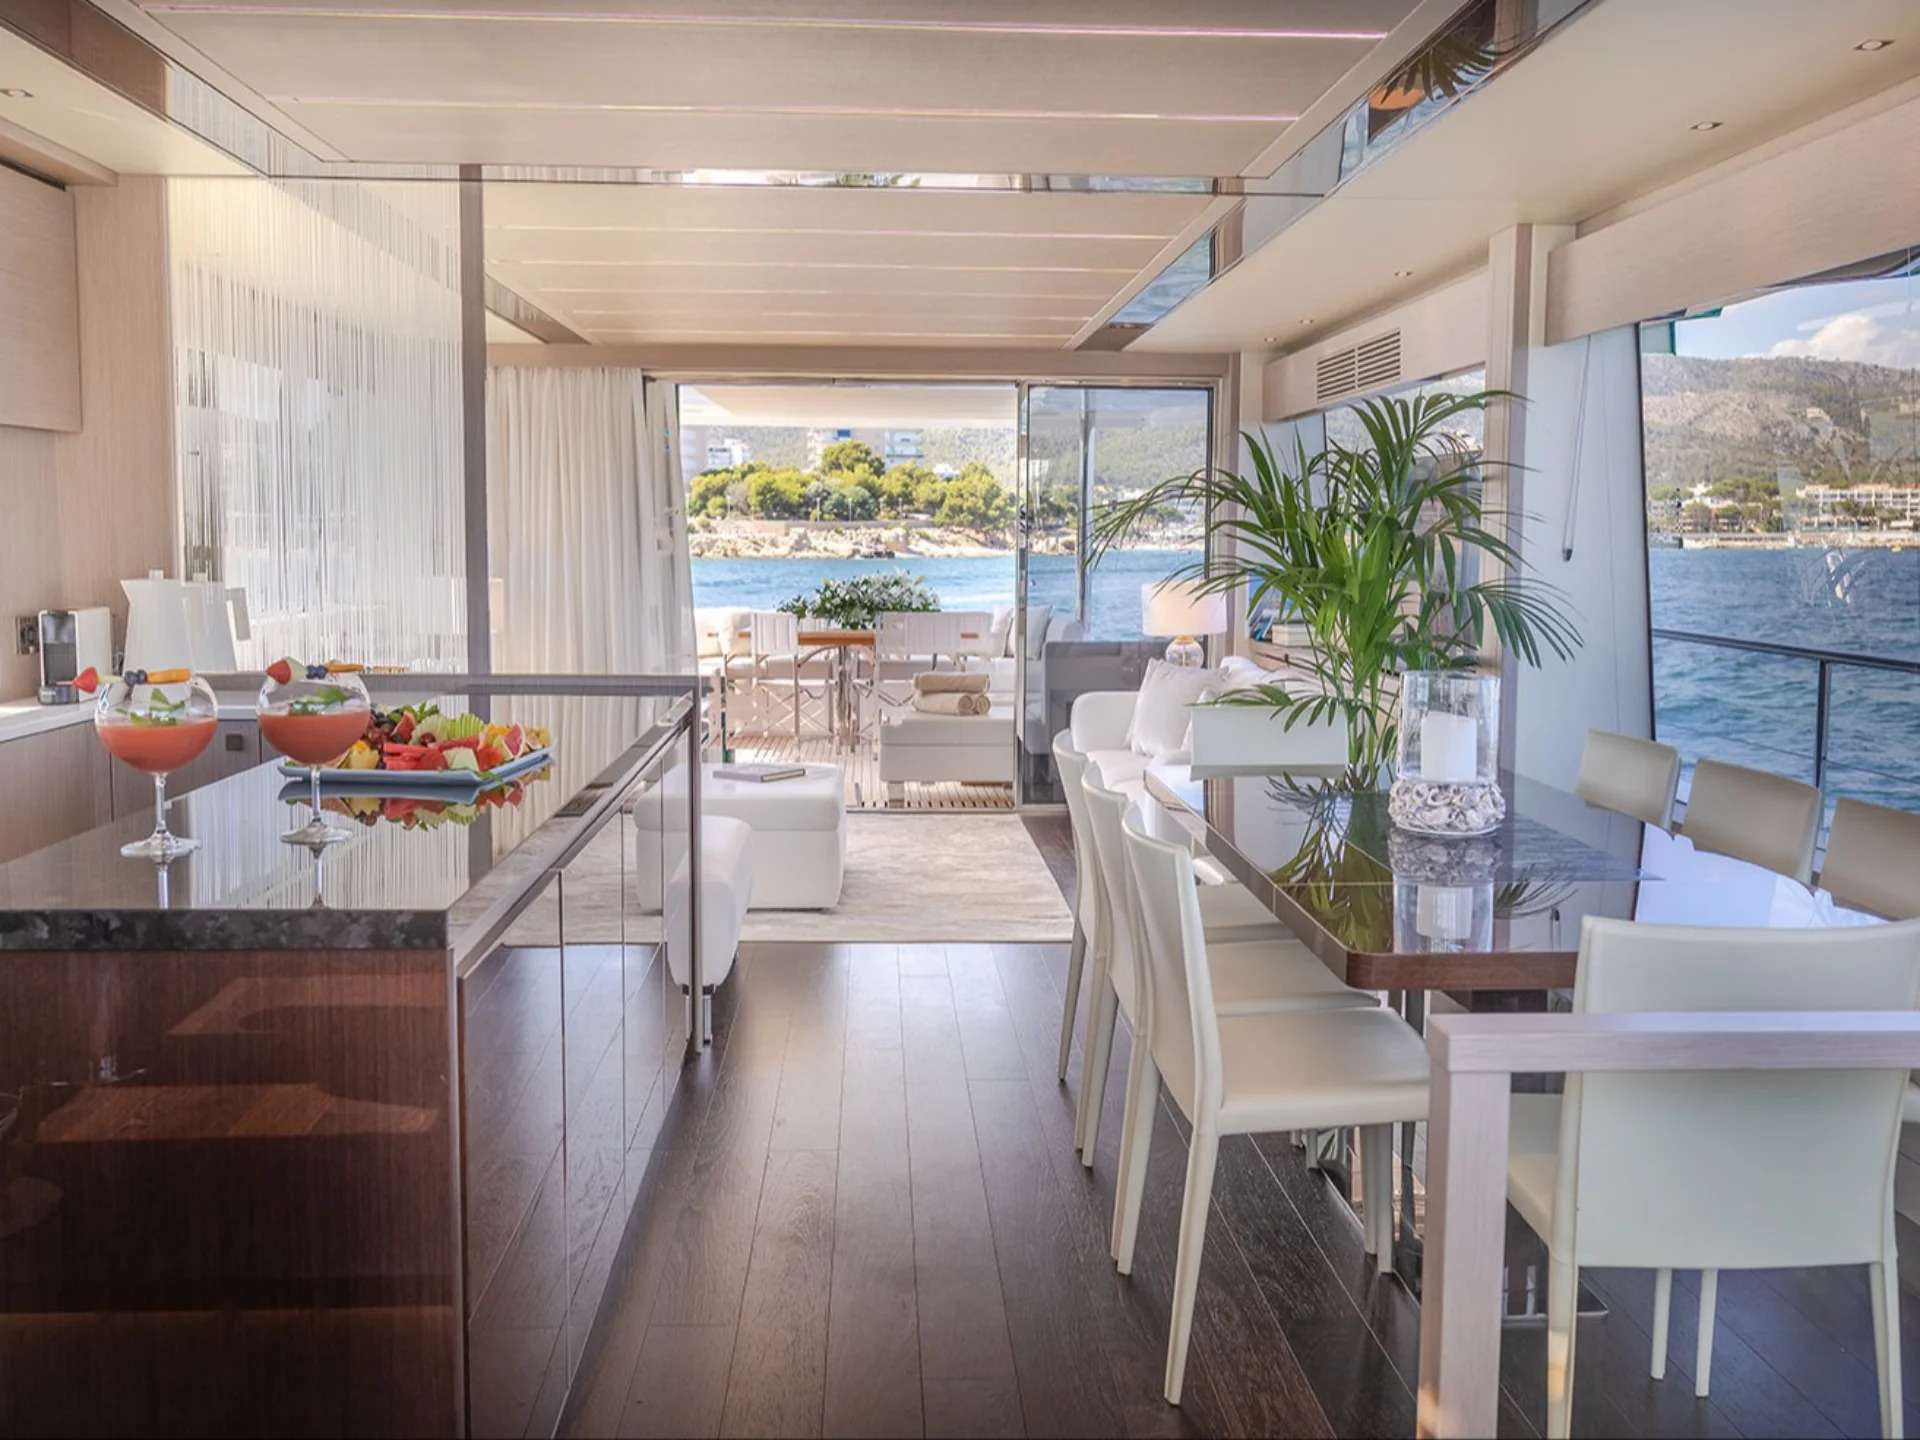 LADY M - Luxury yacht charter Balearics & Boat hire in W. Med -Naples/Sicily, W. Med -Riviera/Cors/Sard., W. Med - Spain/Balearics 3